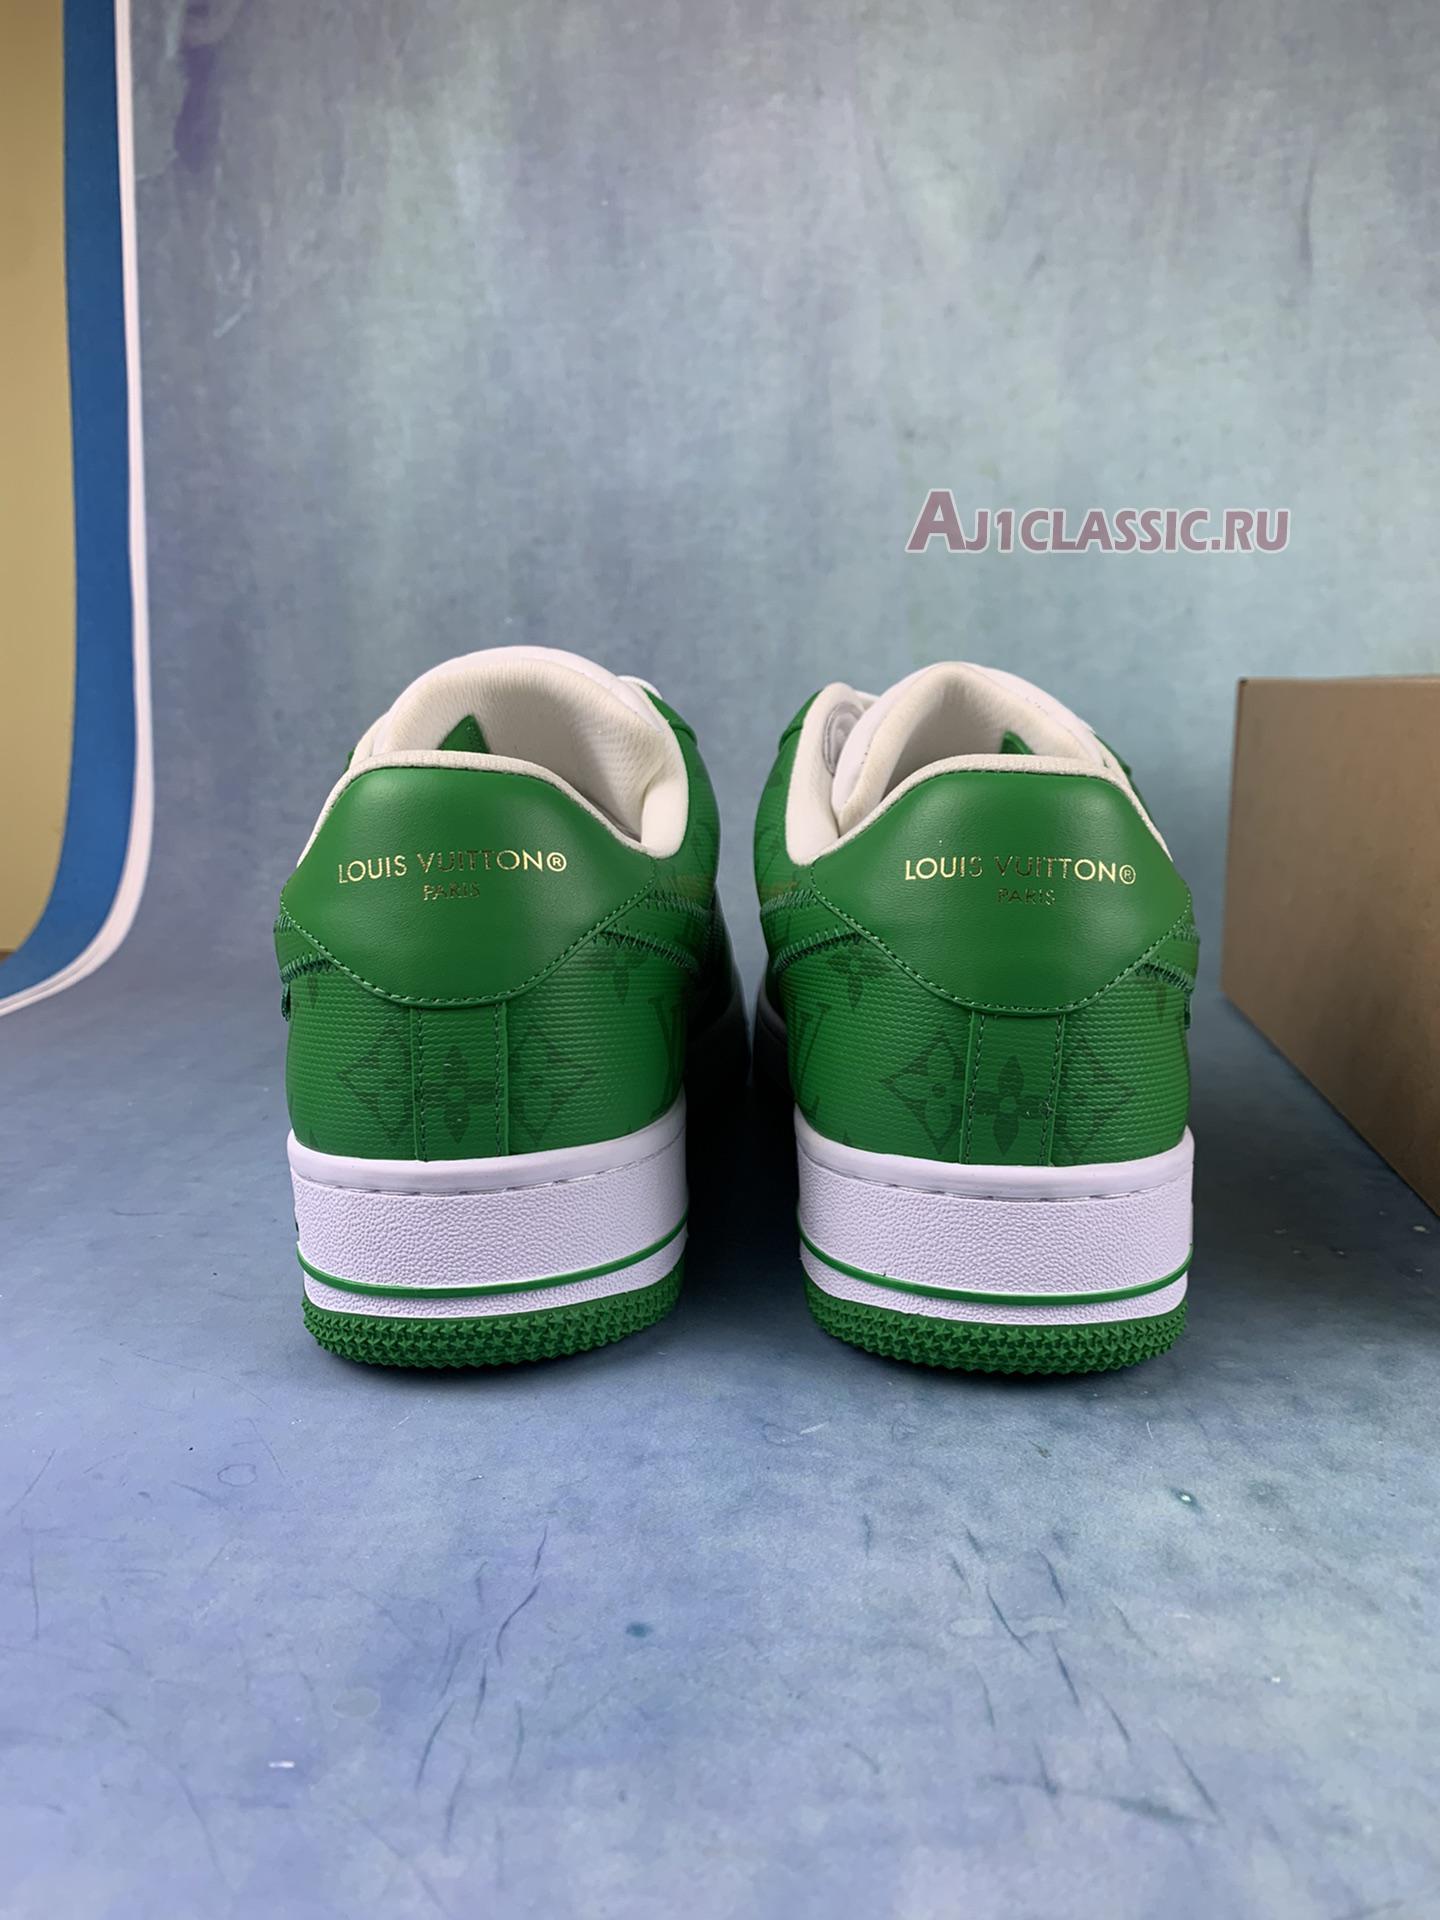 Louis Vuitton x Nike Air Force 1 Low "White Gym Green" 7108-6-2